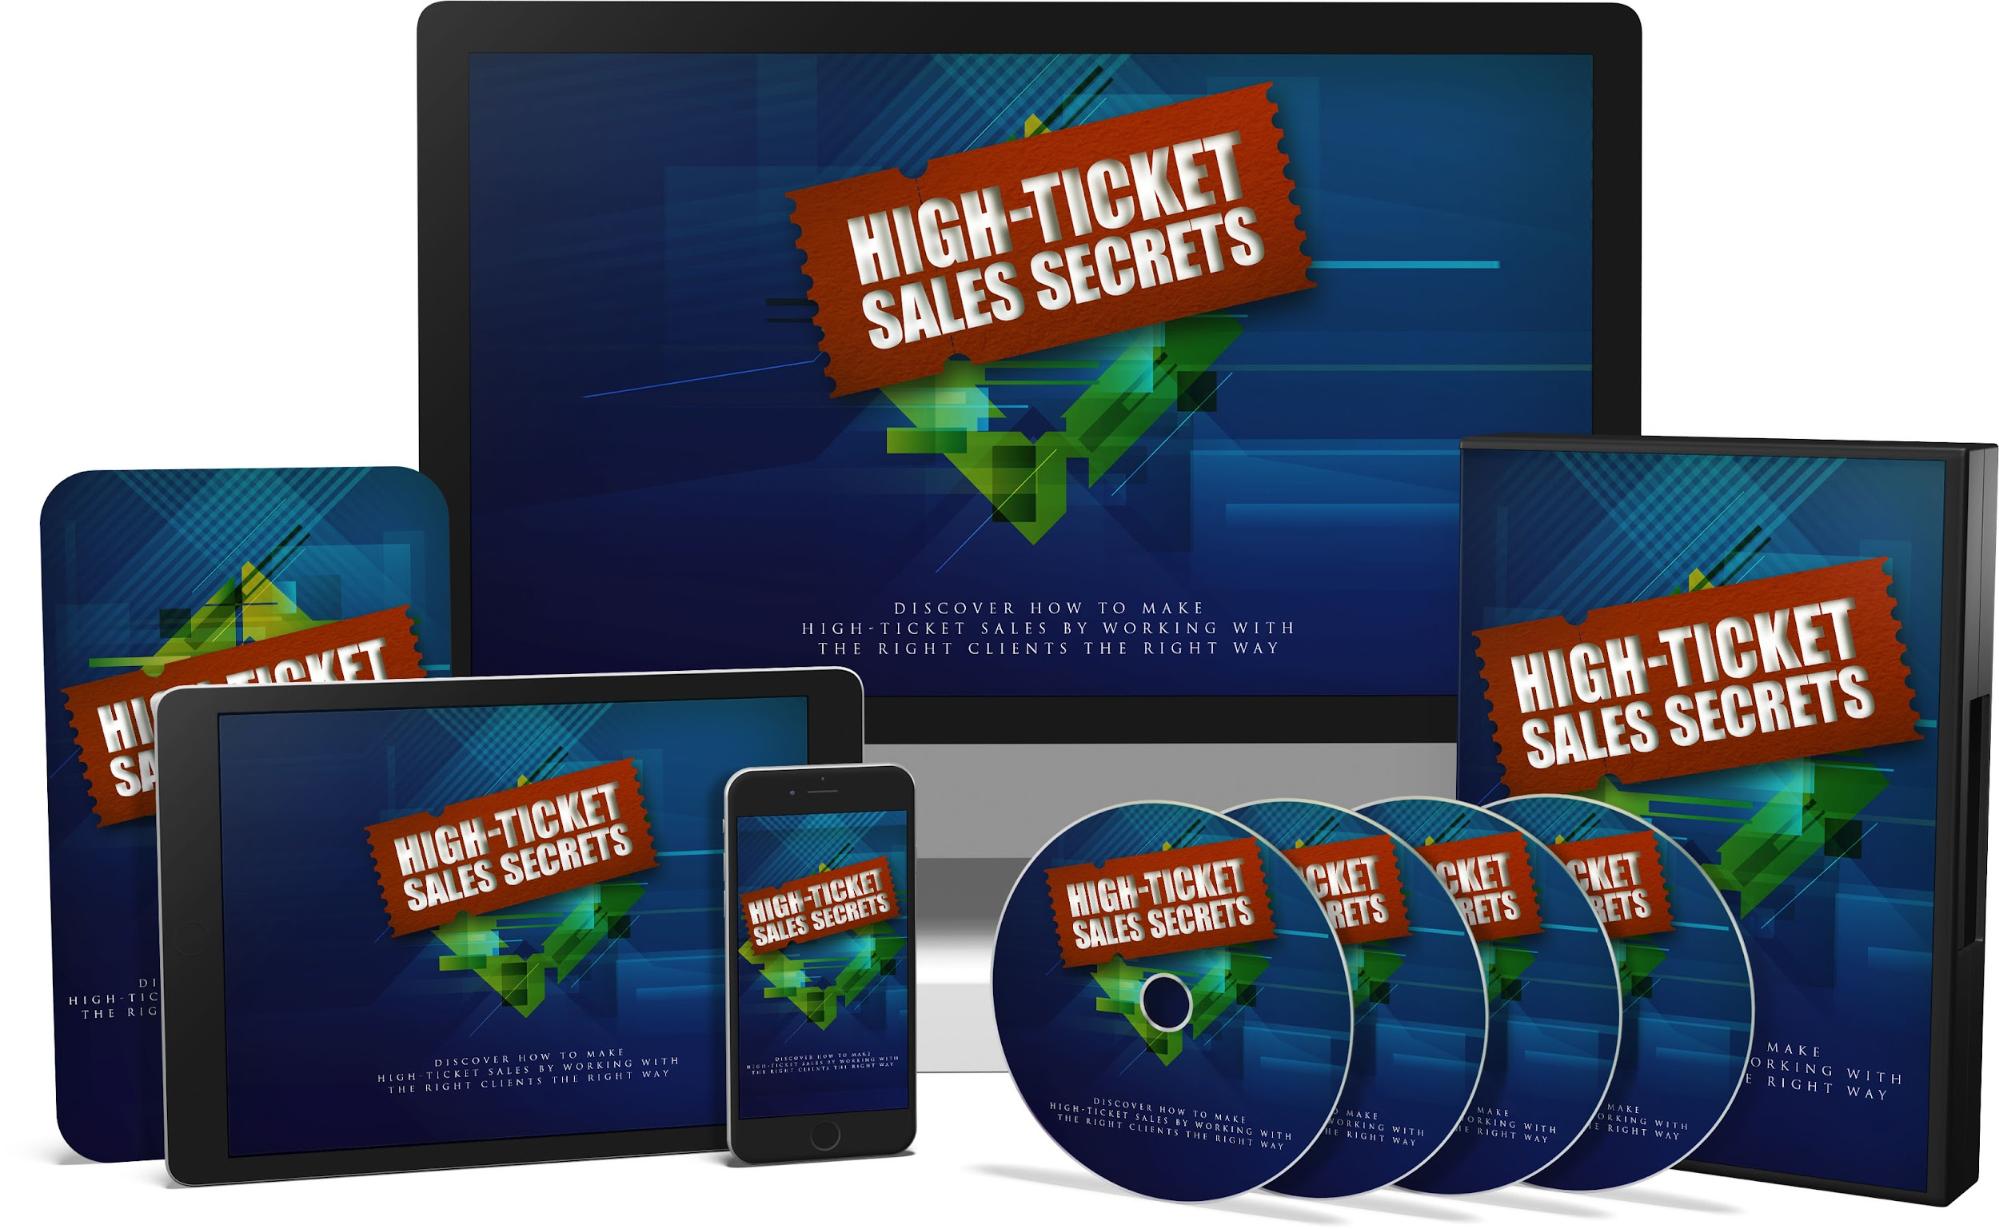 High Ticket Sales Secrets book & video training